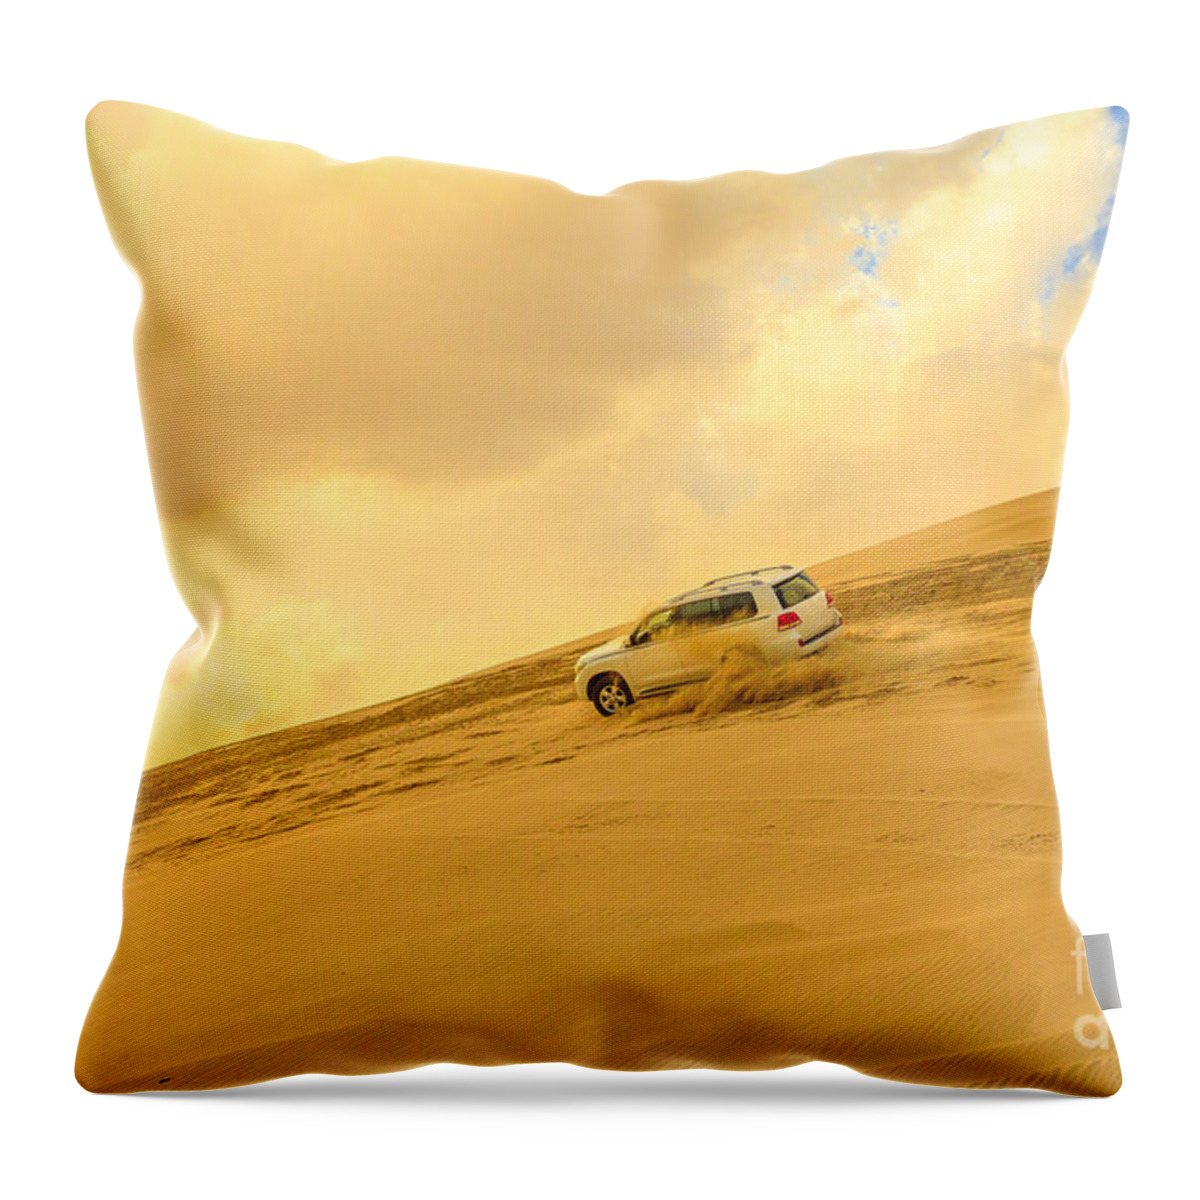 Dune Bashing Throw Pillow featuring the photograph Dune Bashing desert safari #1 by Benny Marty